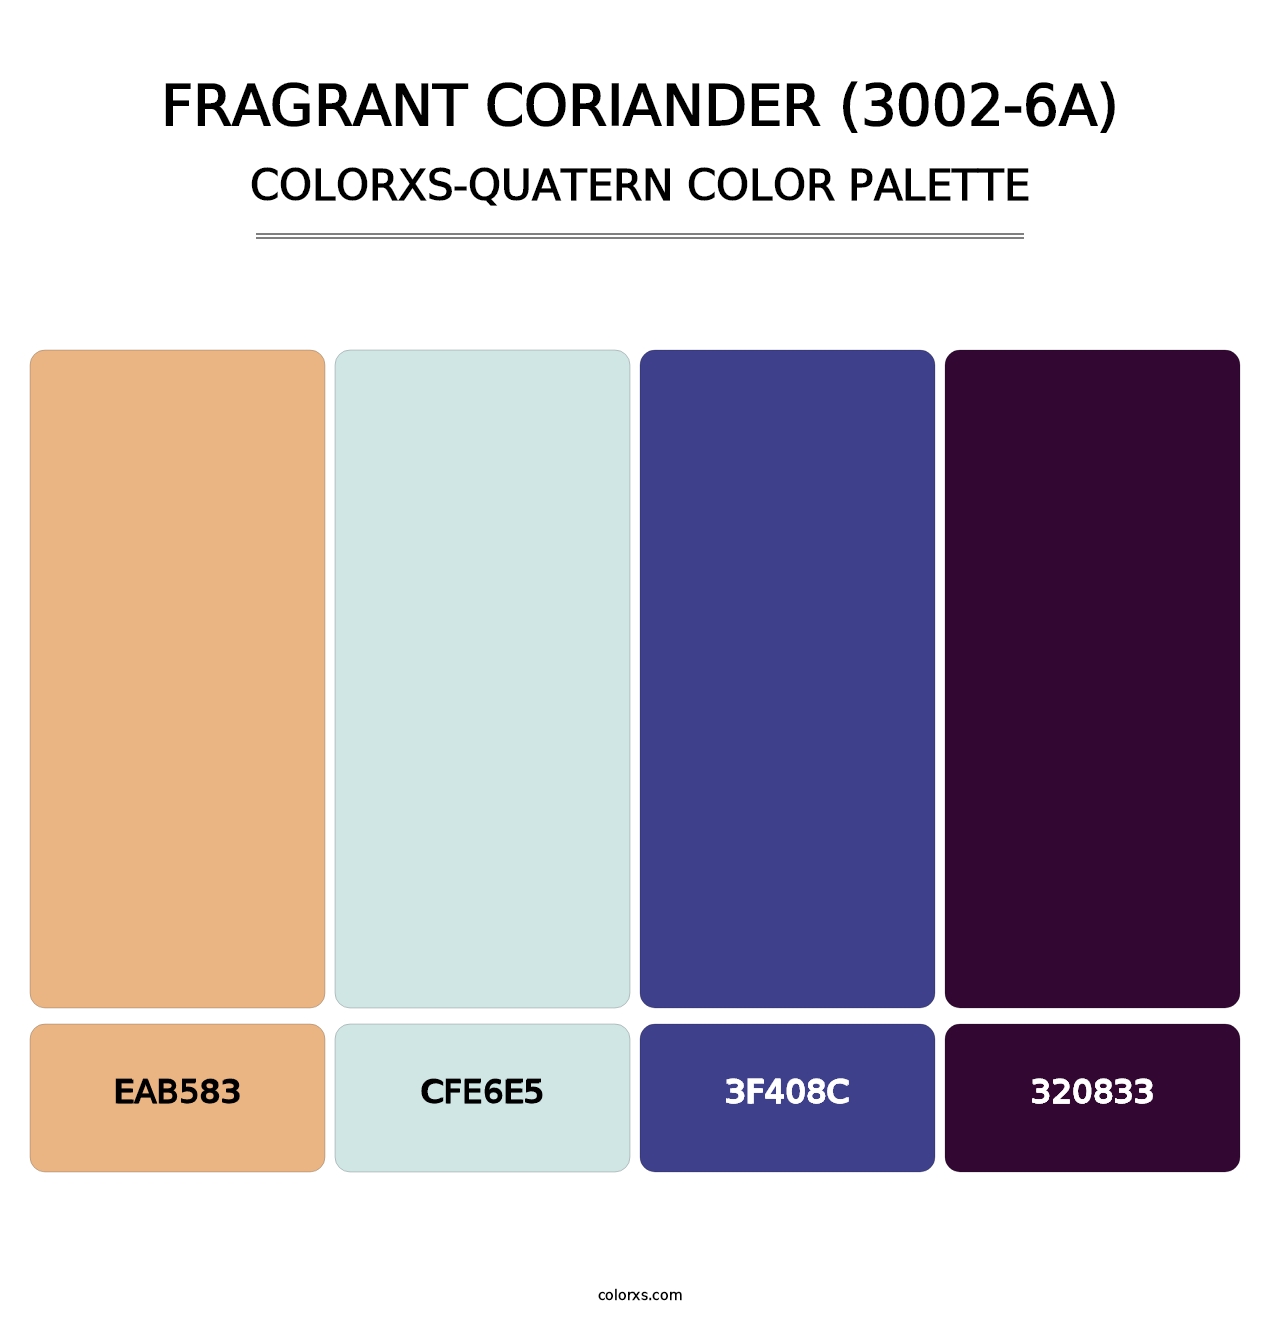 Fragrant Coriander (3002-6A) - Colorxs Quatern Palette